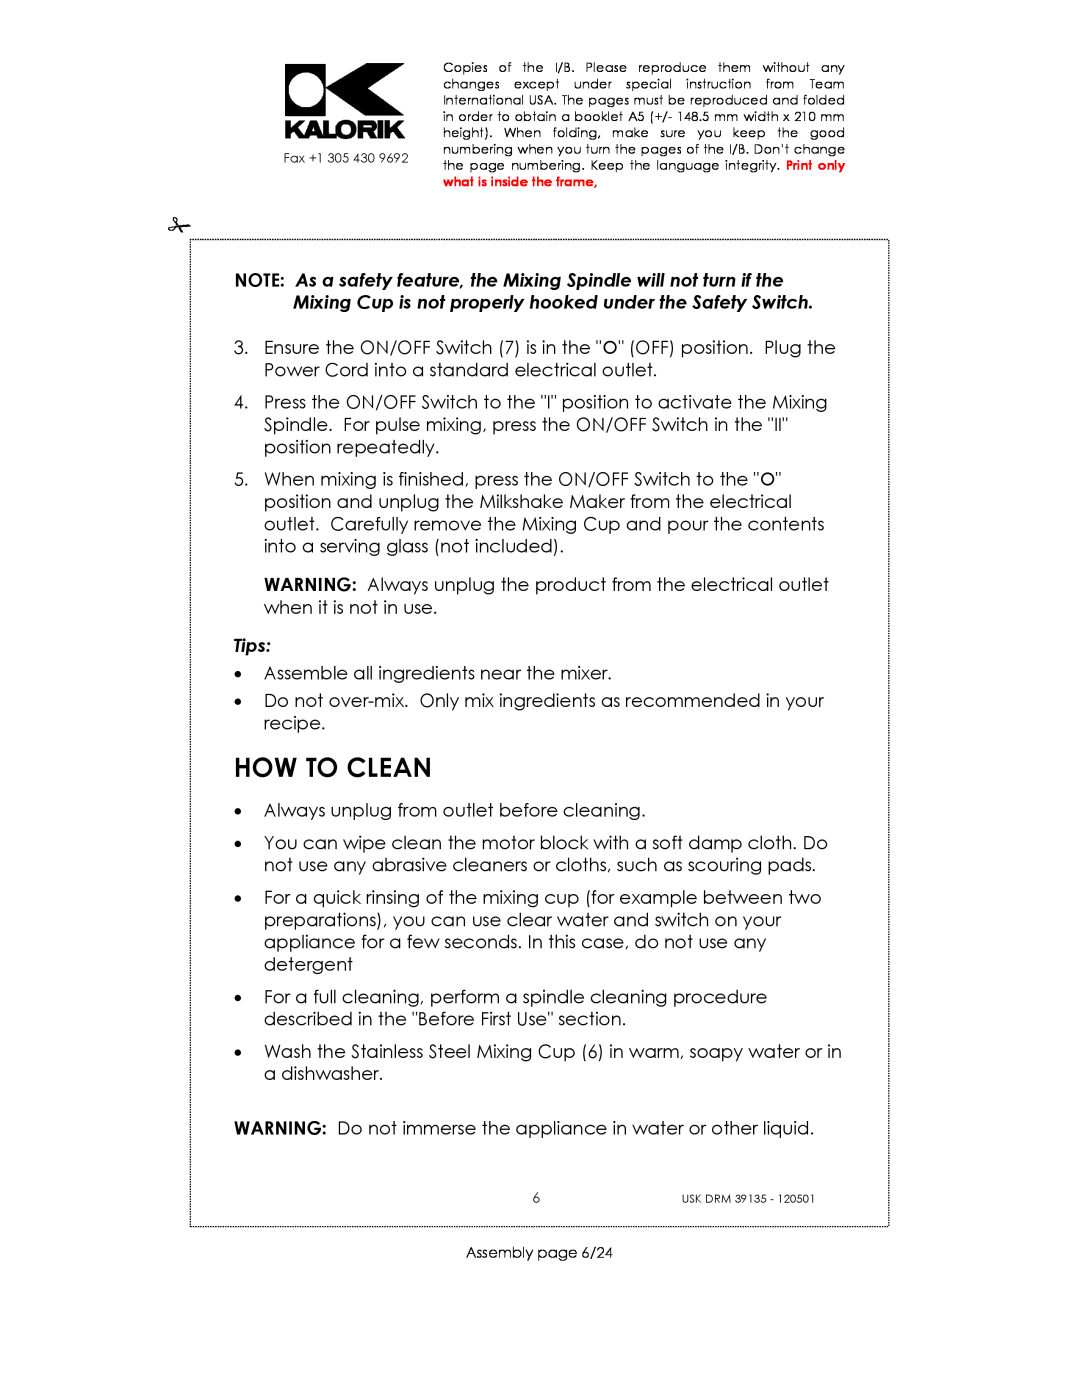 Kalorik USK DRM 39135 manual How To Clean, Tips 